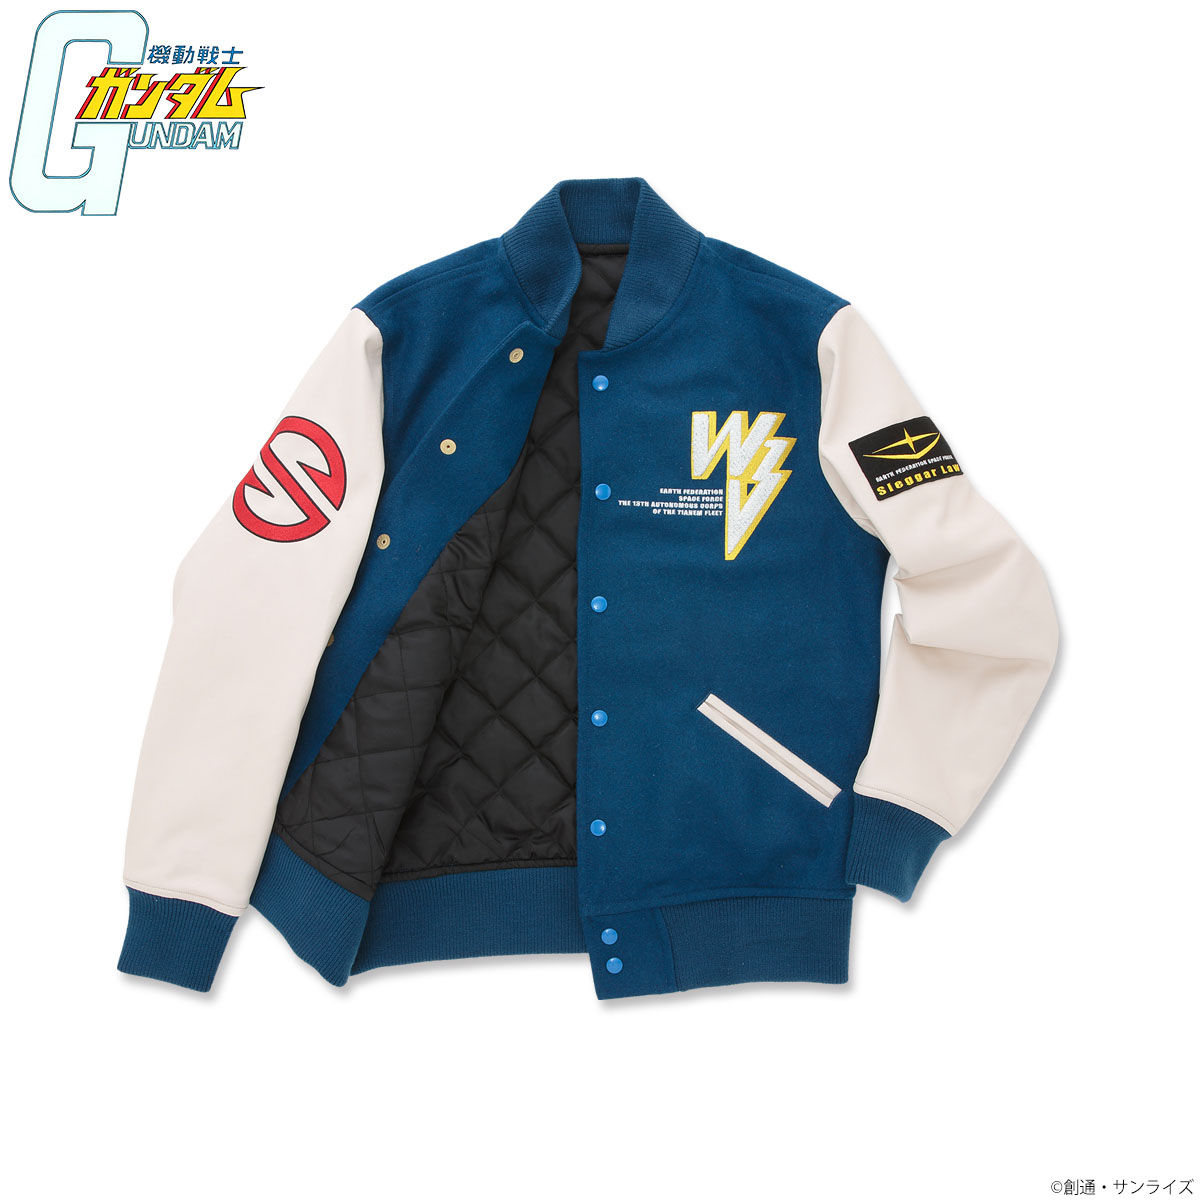 Mobile Suit Gundam Sleggar Law Personal Emblem Jacket